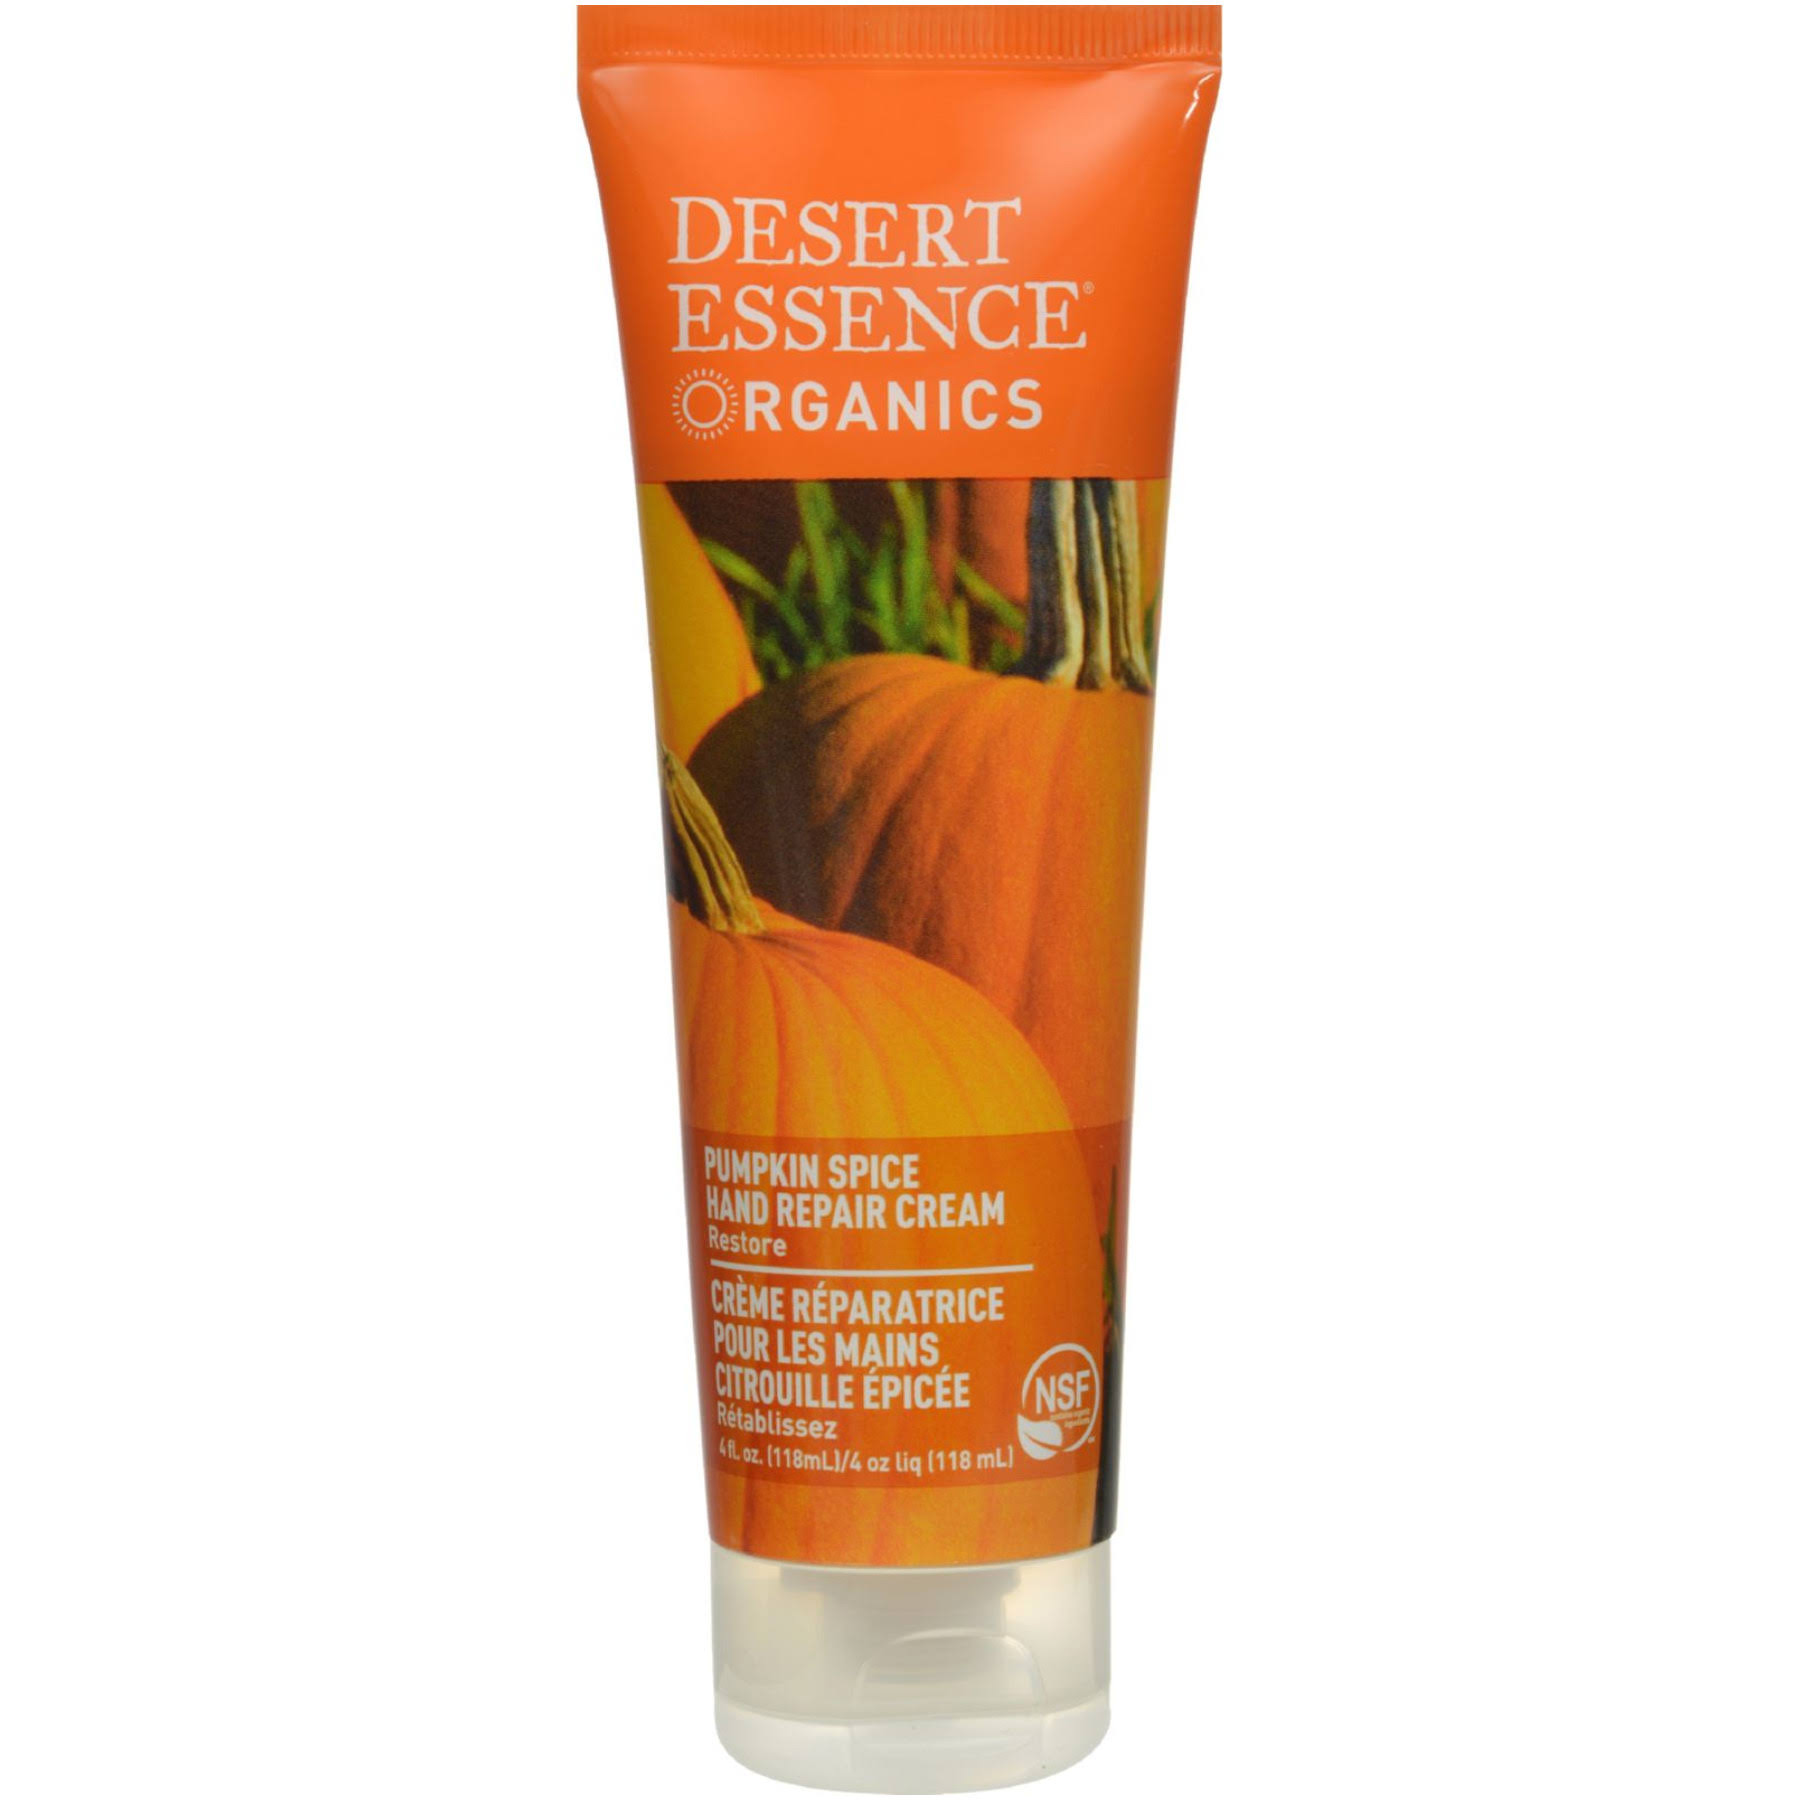 Desert Essence Organics Hand Repair Cream - Pumpkin Spice 4 FL Oz